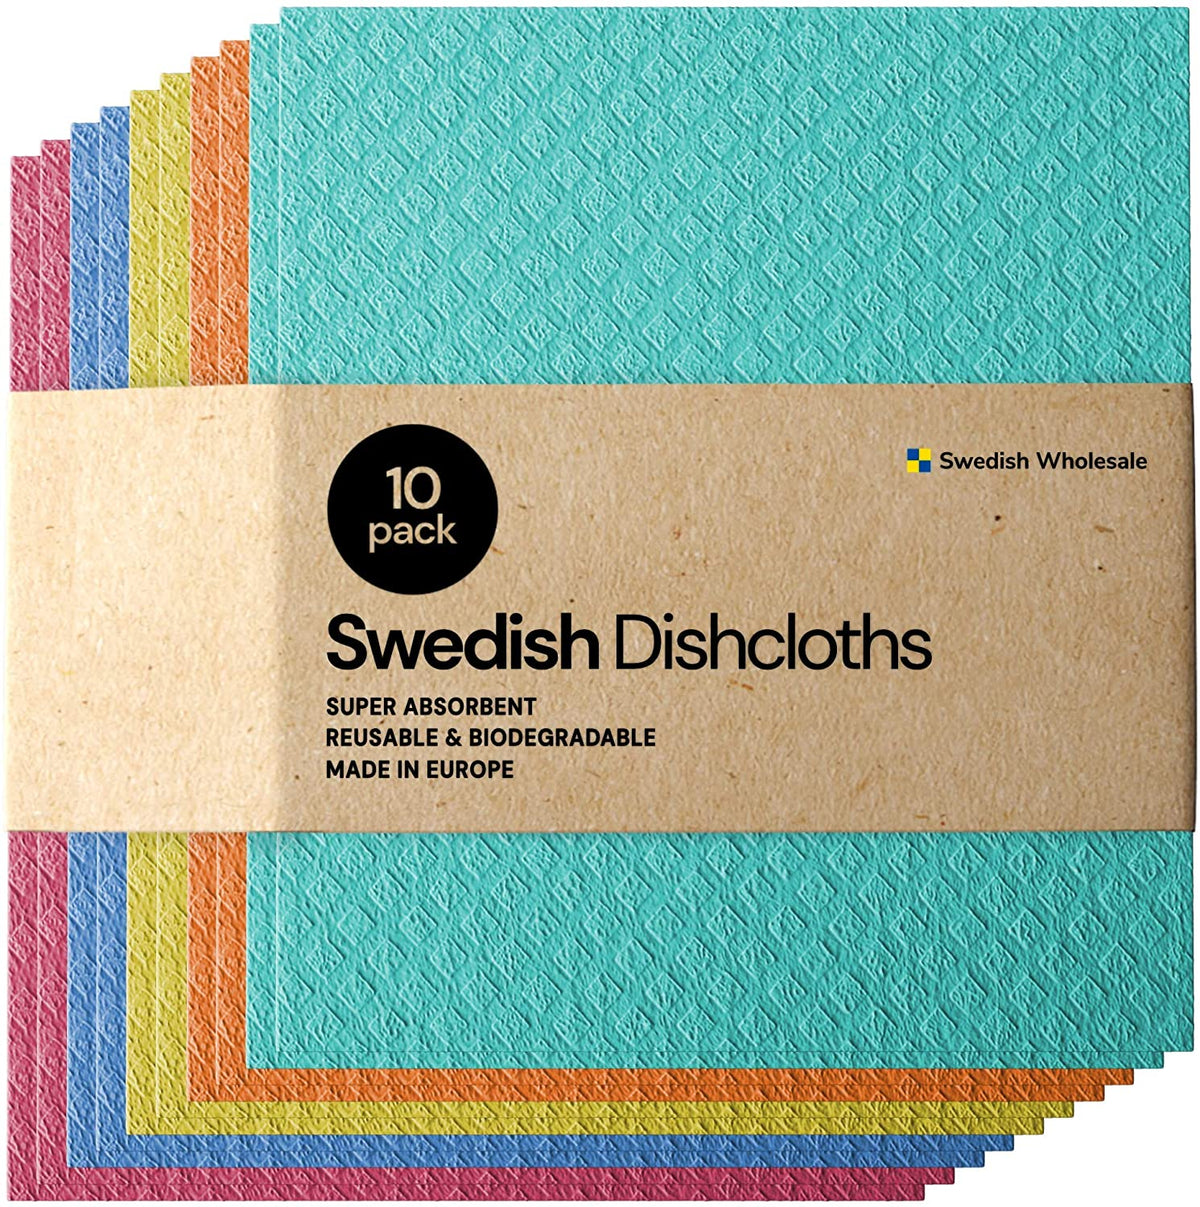 PACK OF 2 Germany Dishcloth Cellulose Sponge Cloths - Bulk Eco